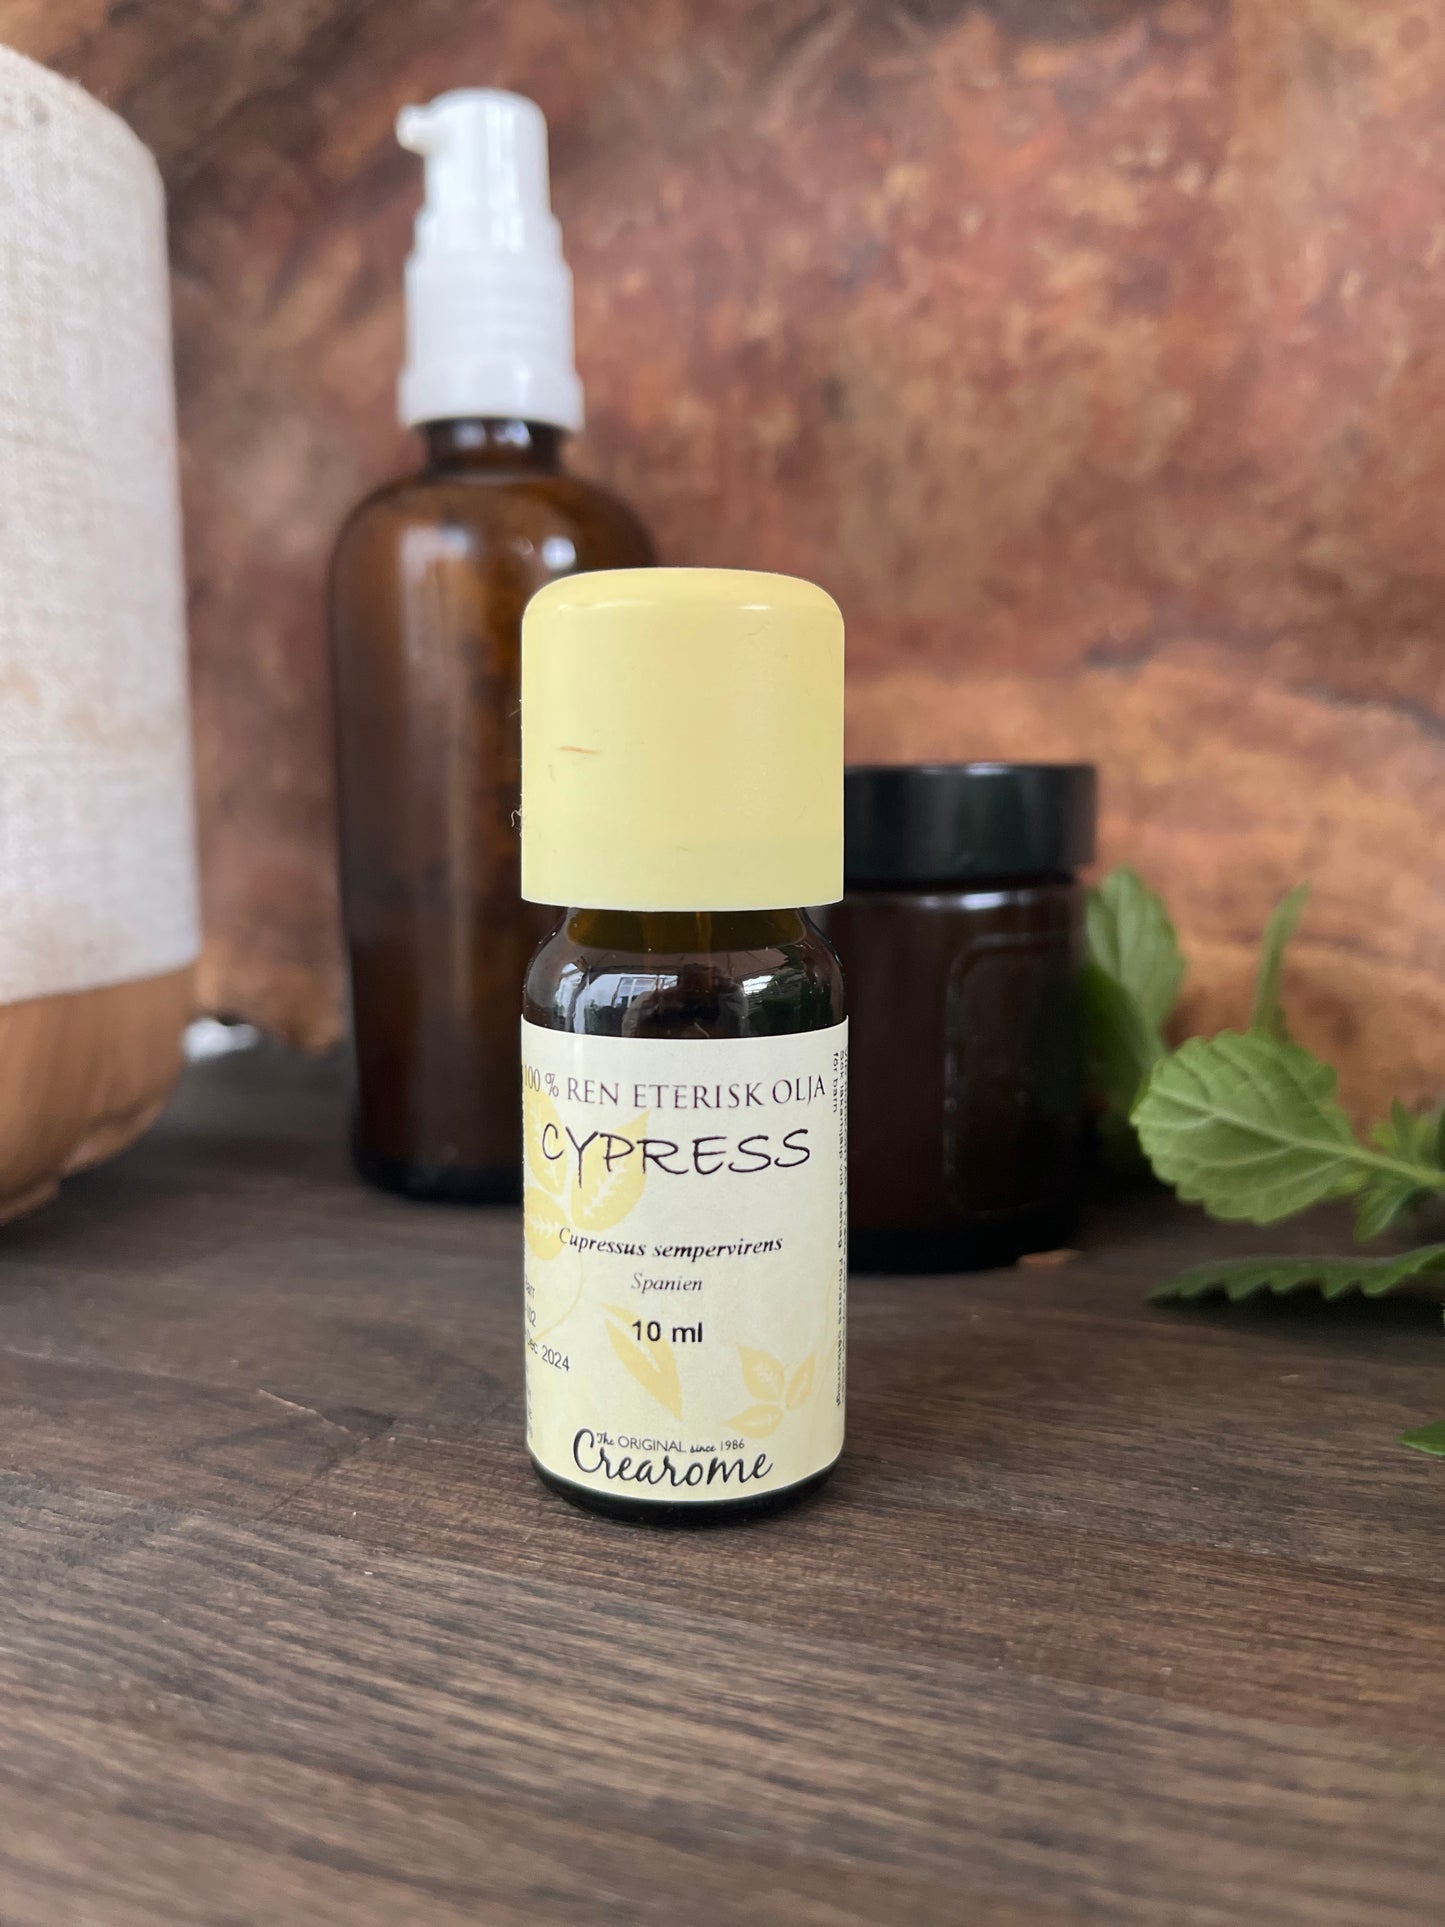 Cypress eterisk olja - Crearome